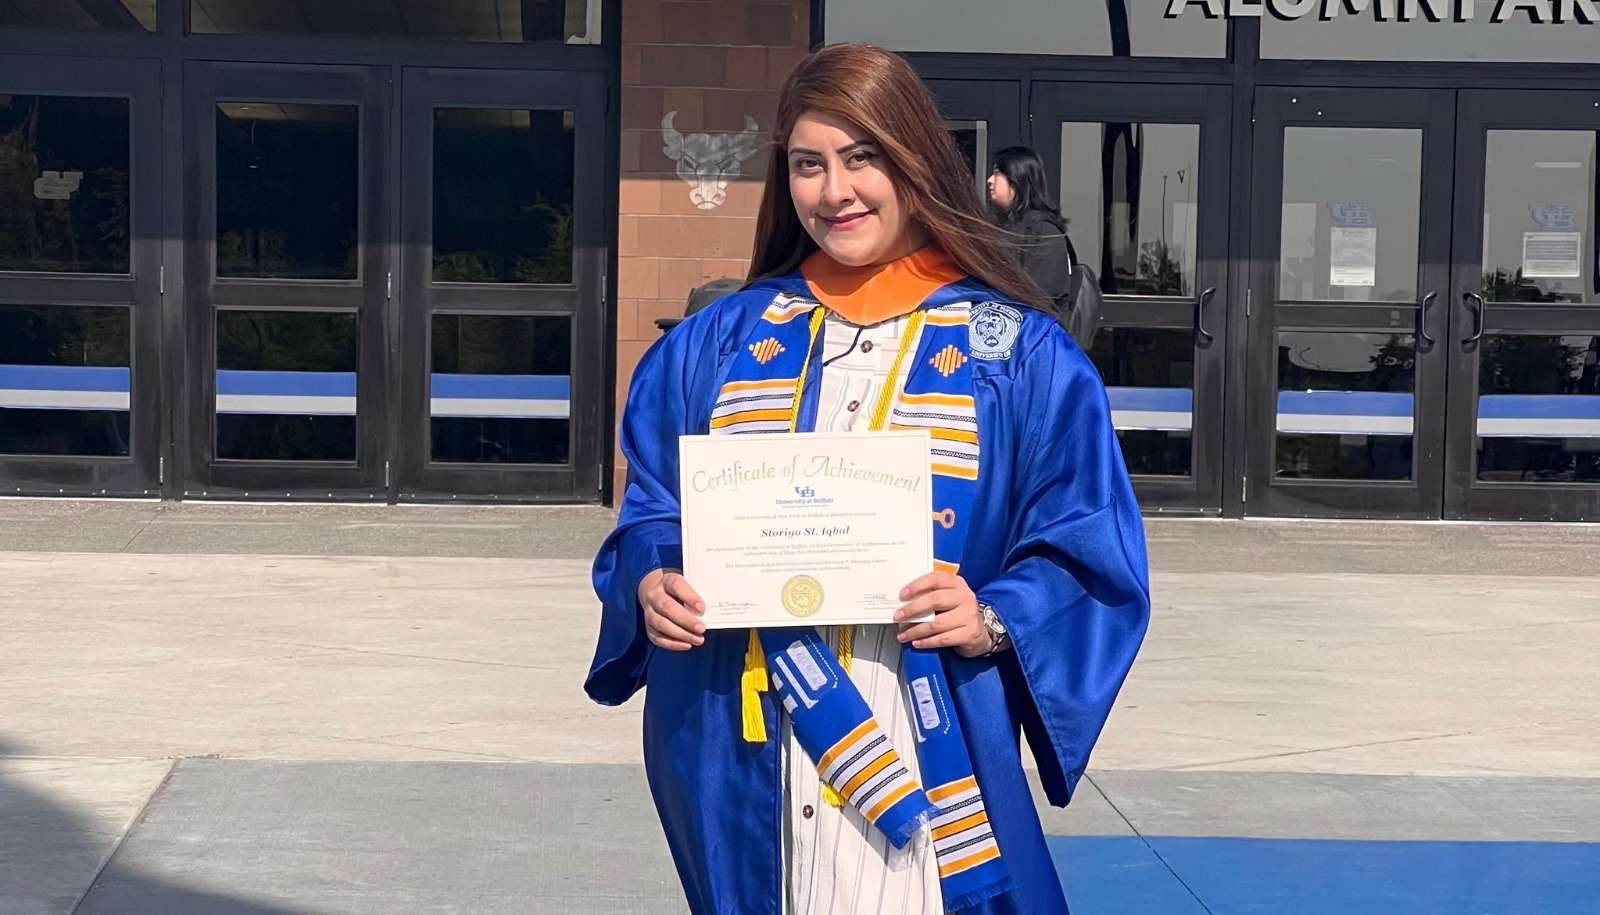 Storiya Khan, sister of Mashal Khan, completes graduation in New York